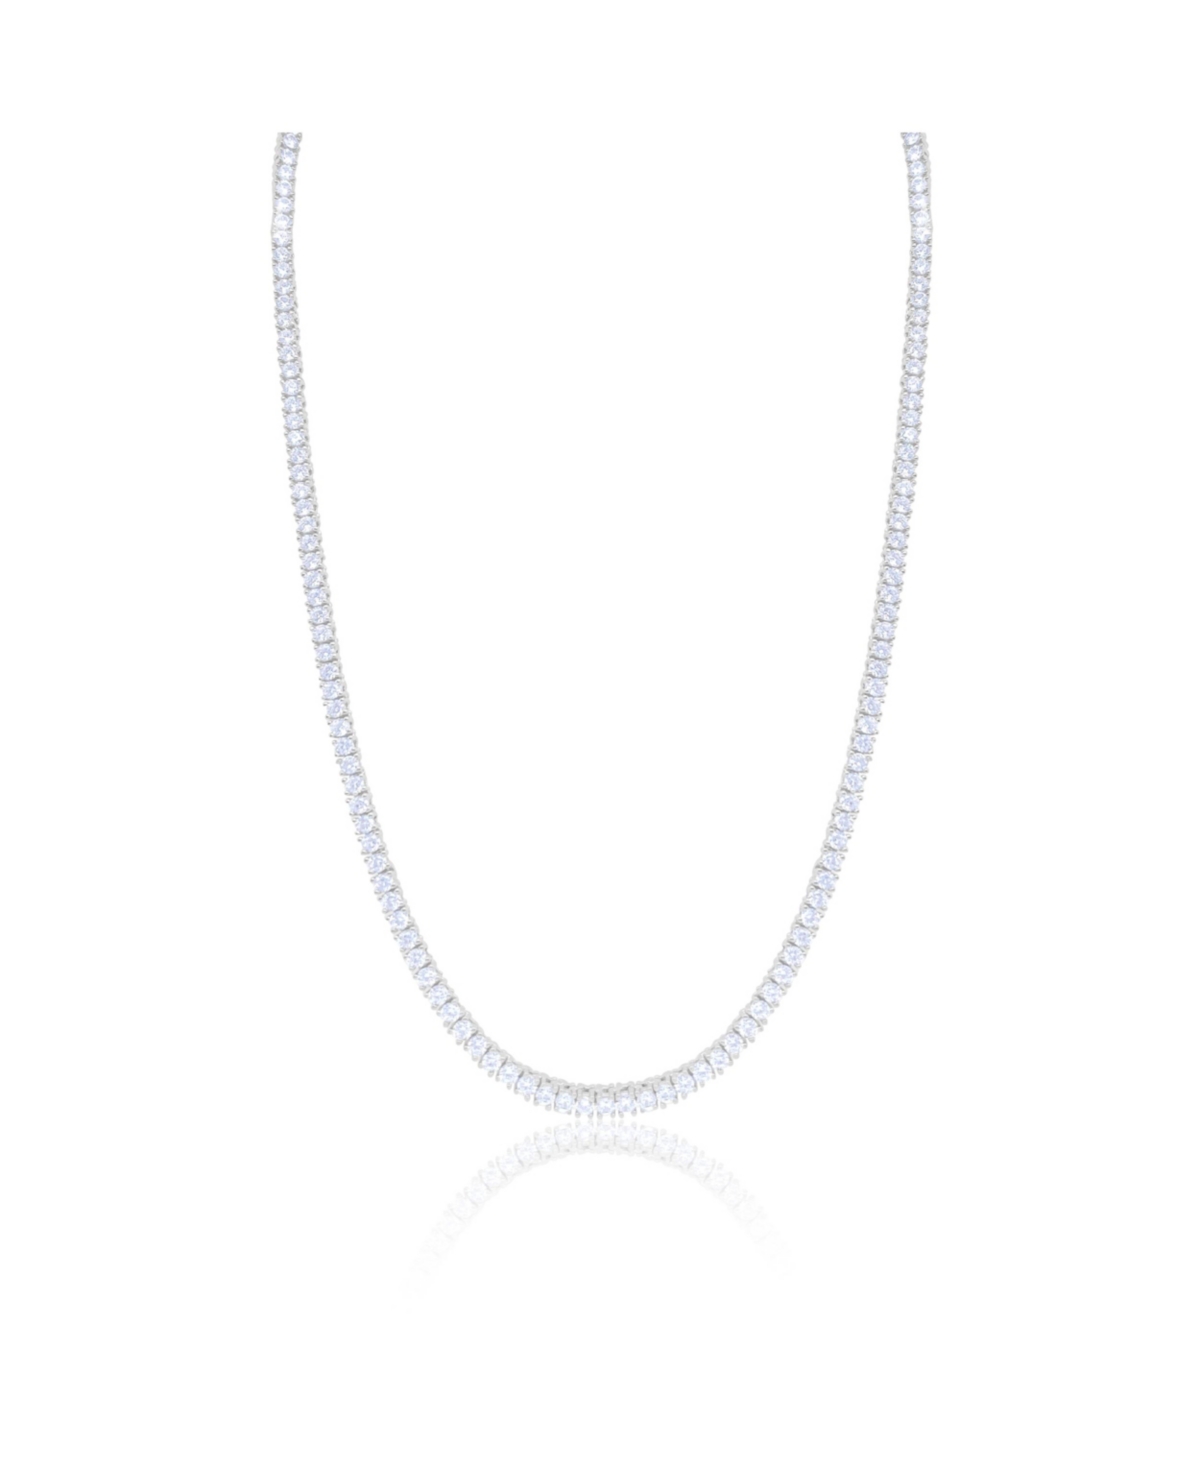 White Gold Cz Tennis Necklace - White